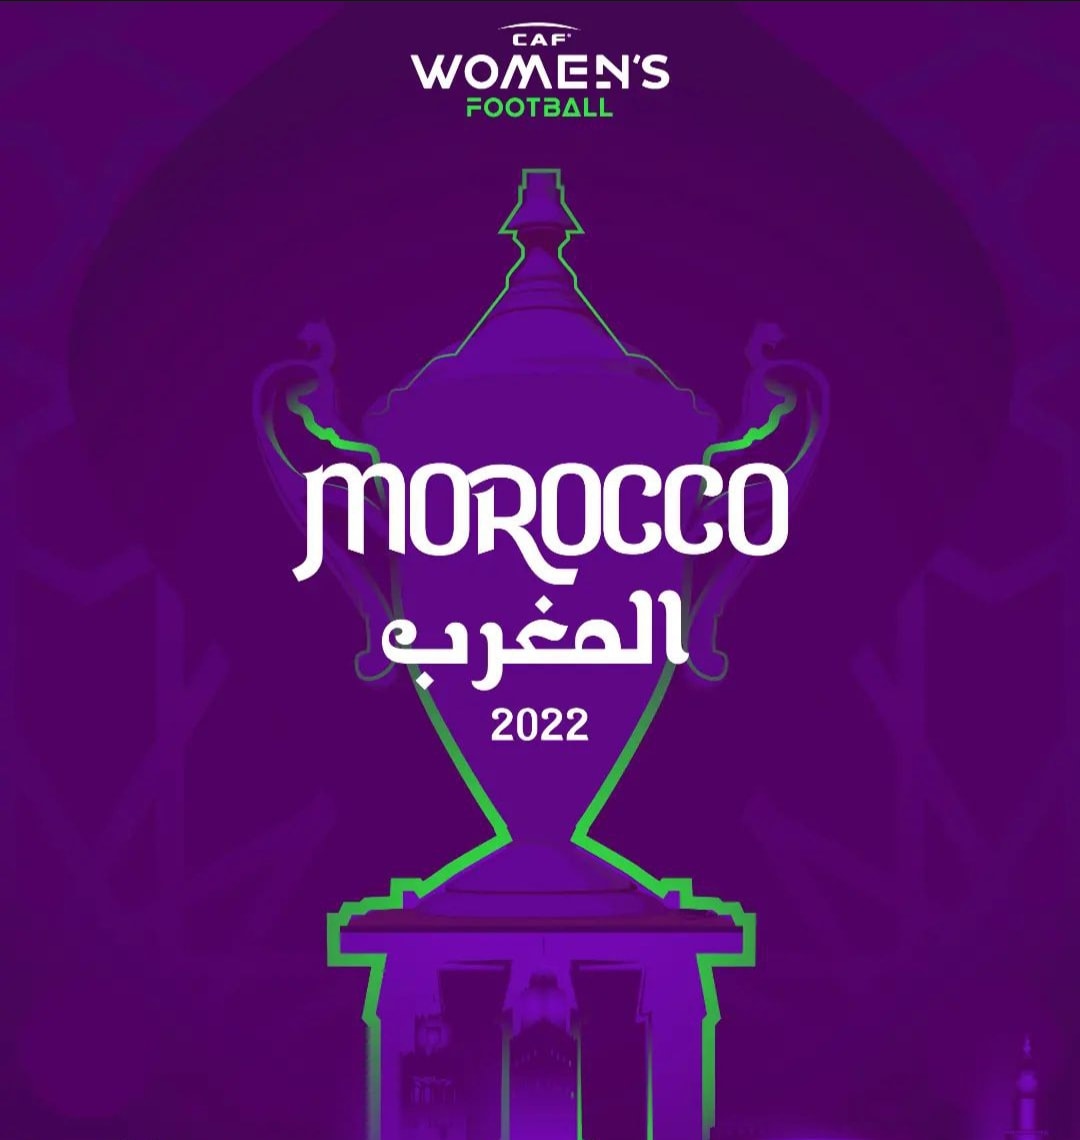 La CAN féminine 2022